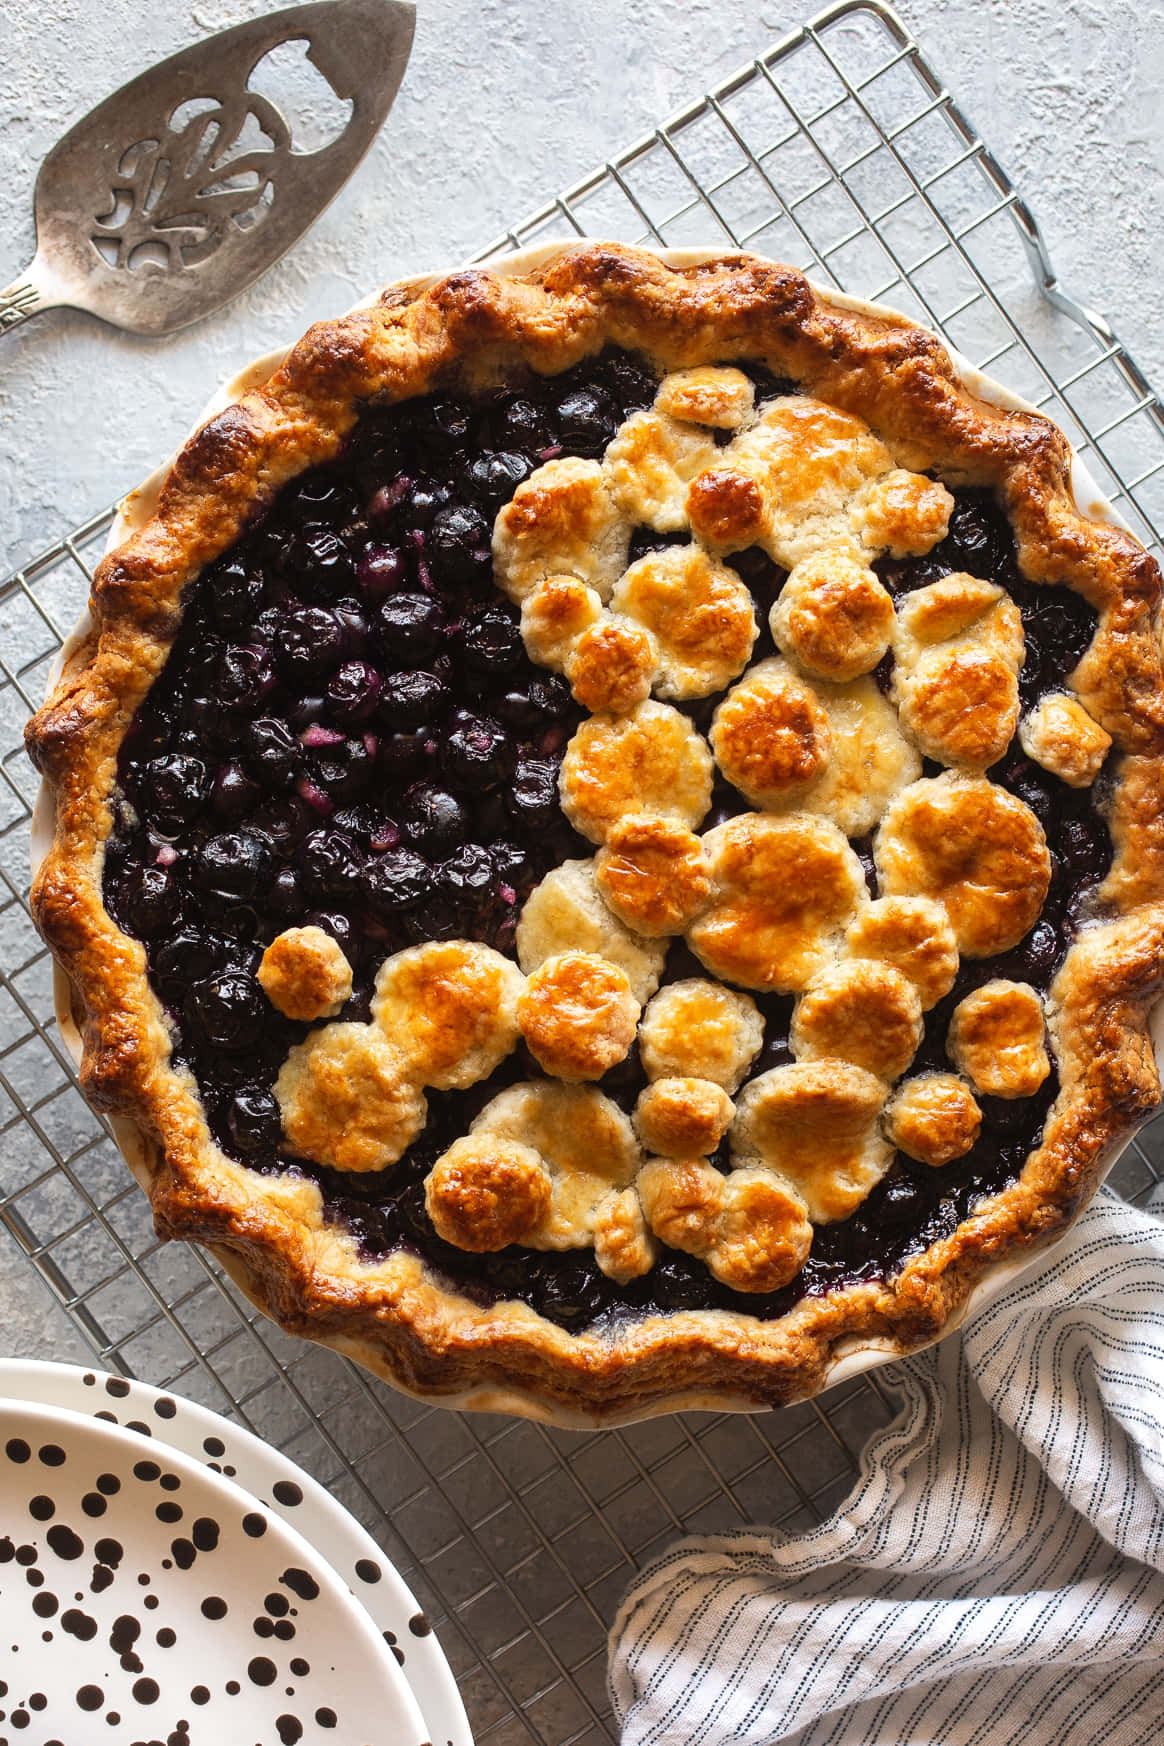 "Indulge in this sweet, juicy blueberry pie!" Wallpaper